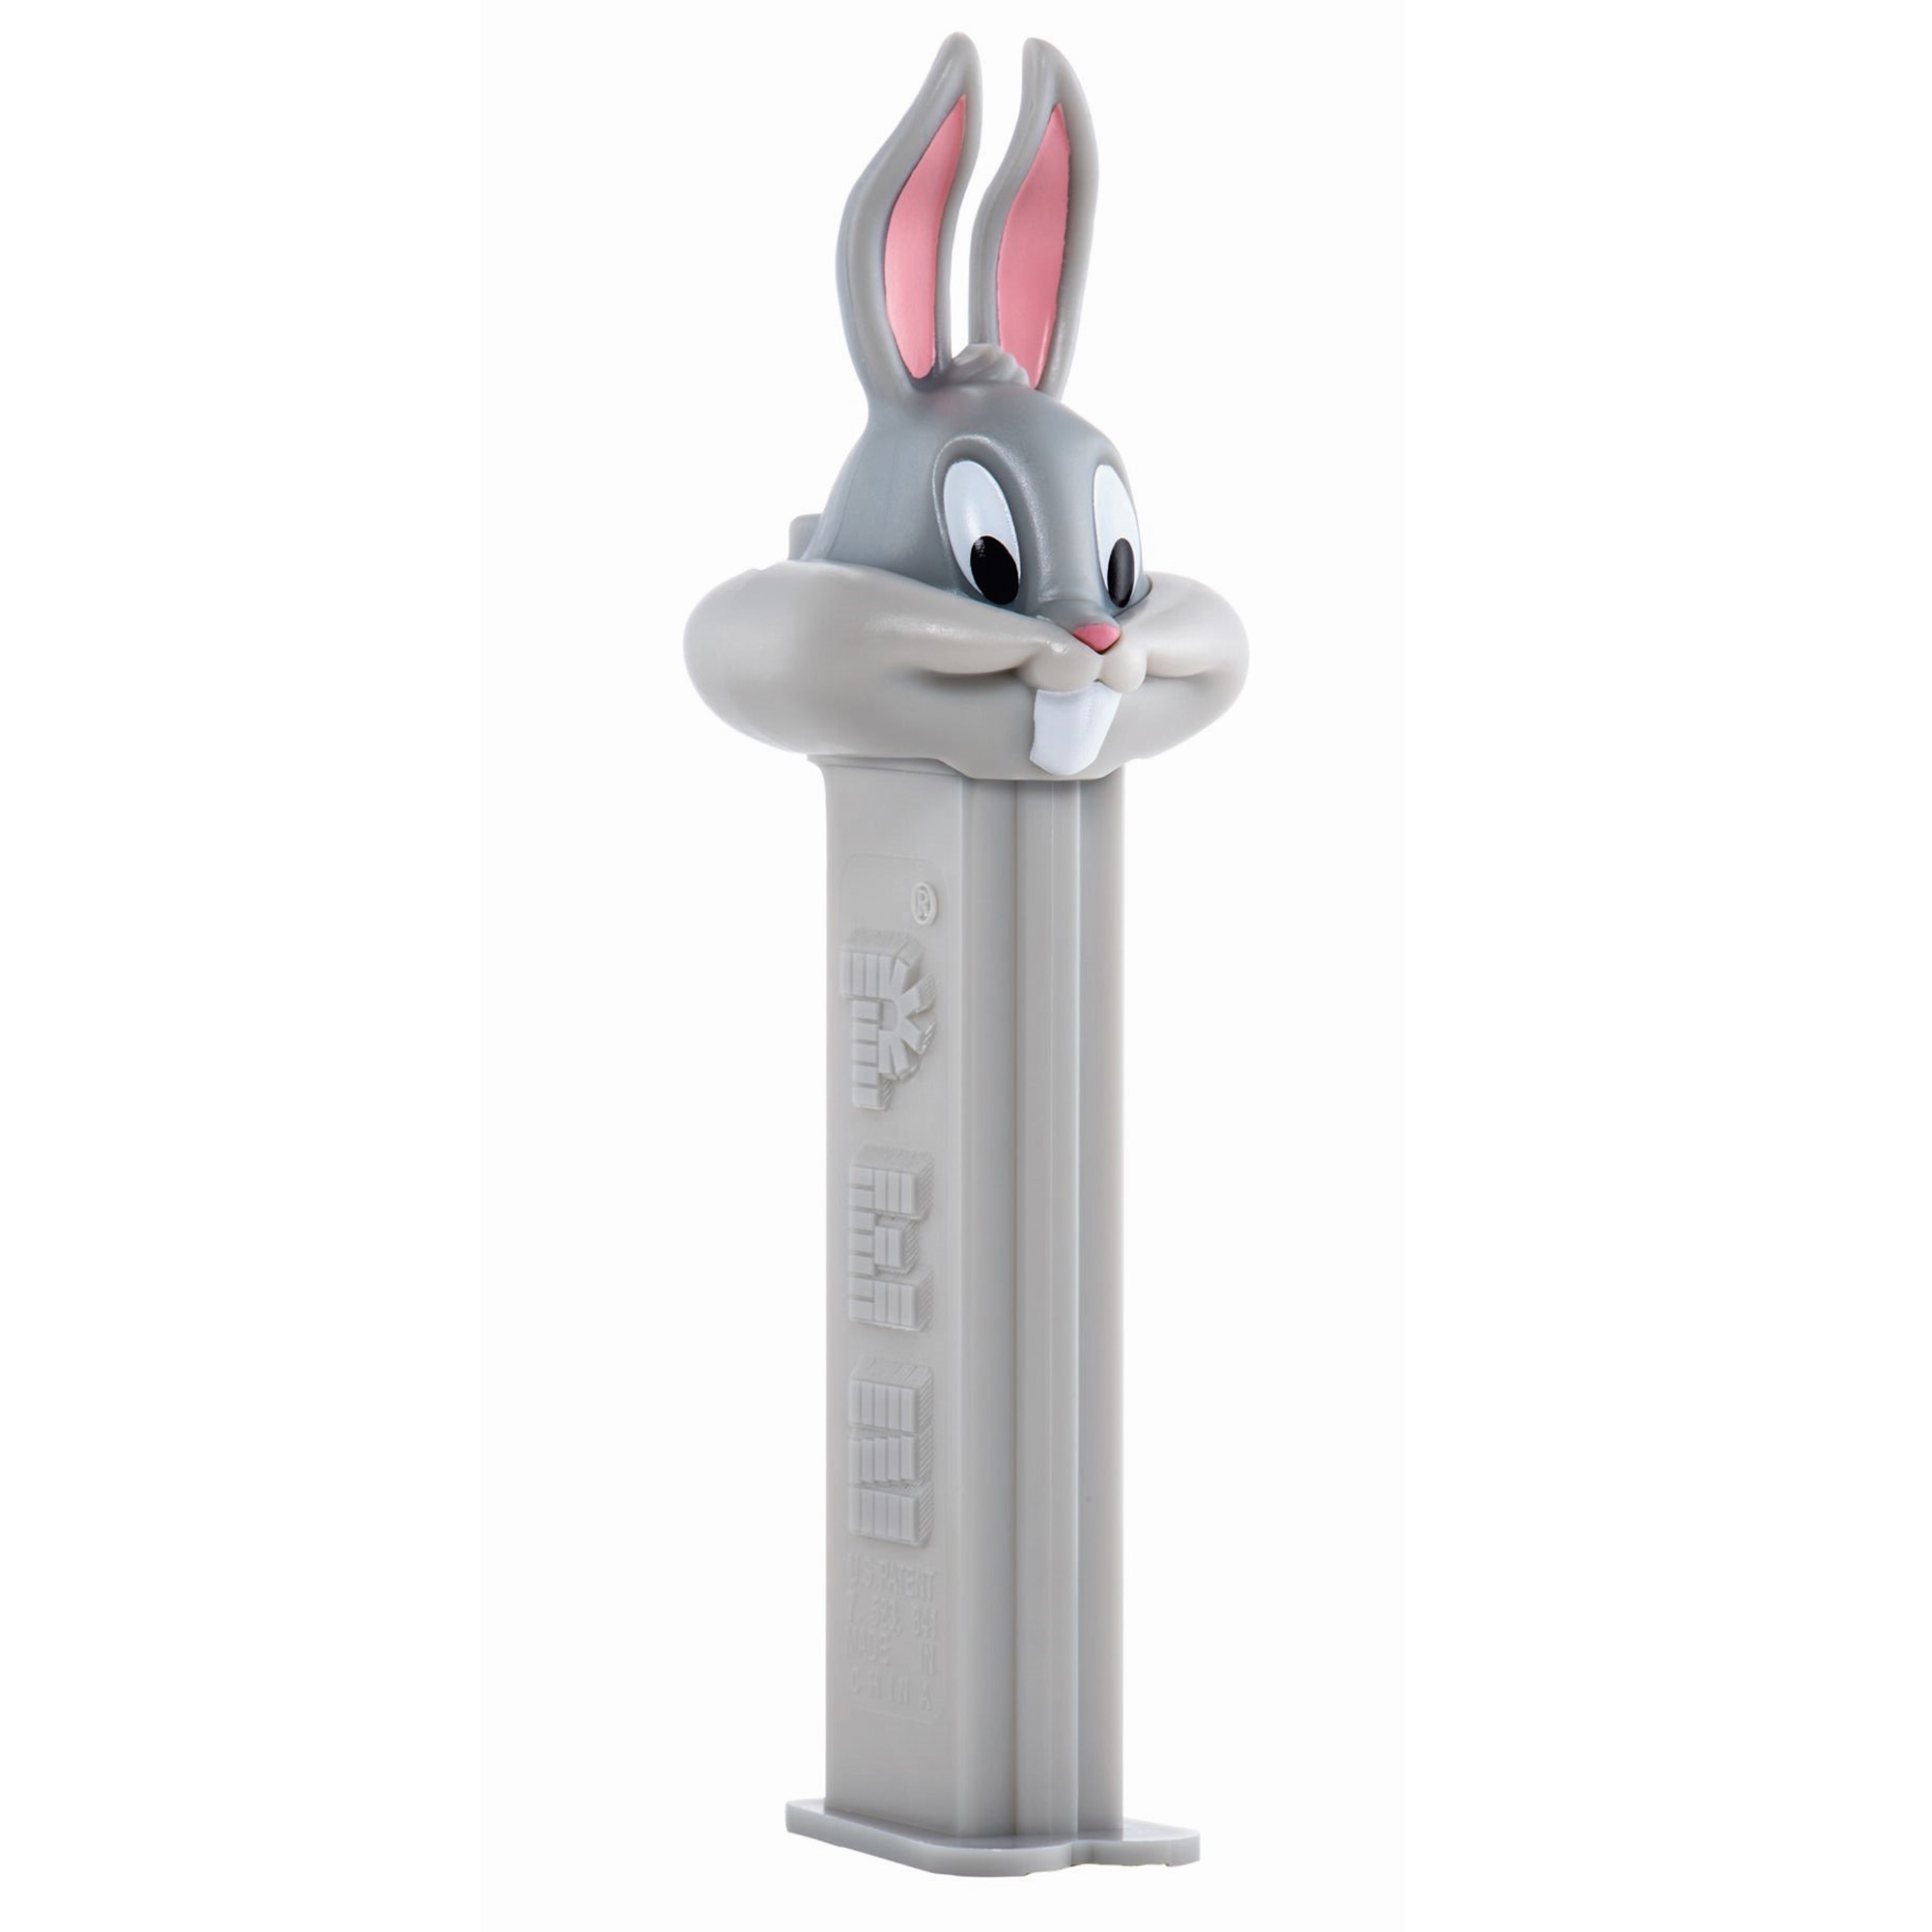 PEZ - Bugs Bunny "Looney Tunes" Spender & Bonbons